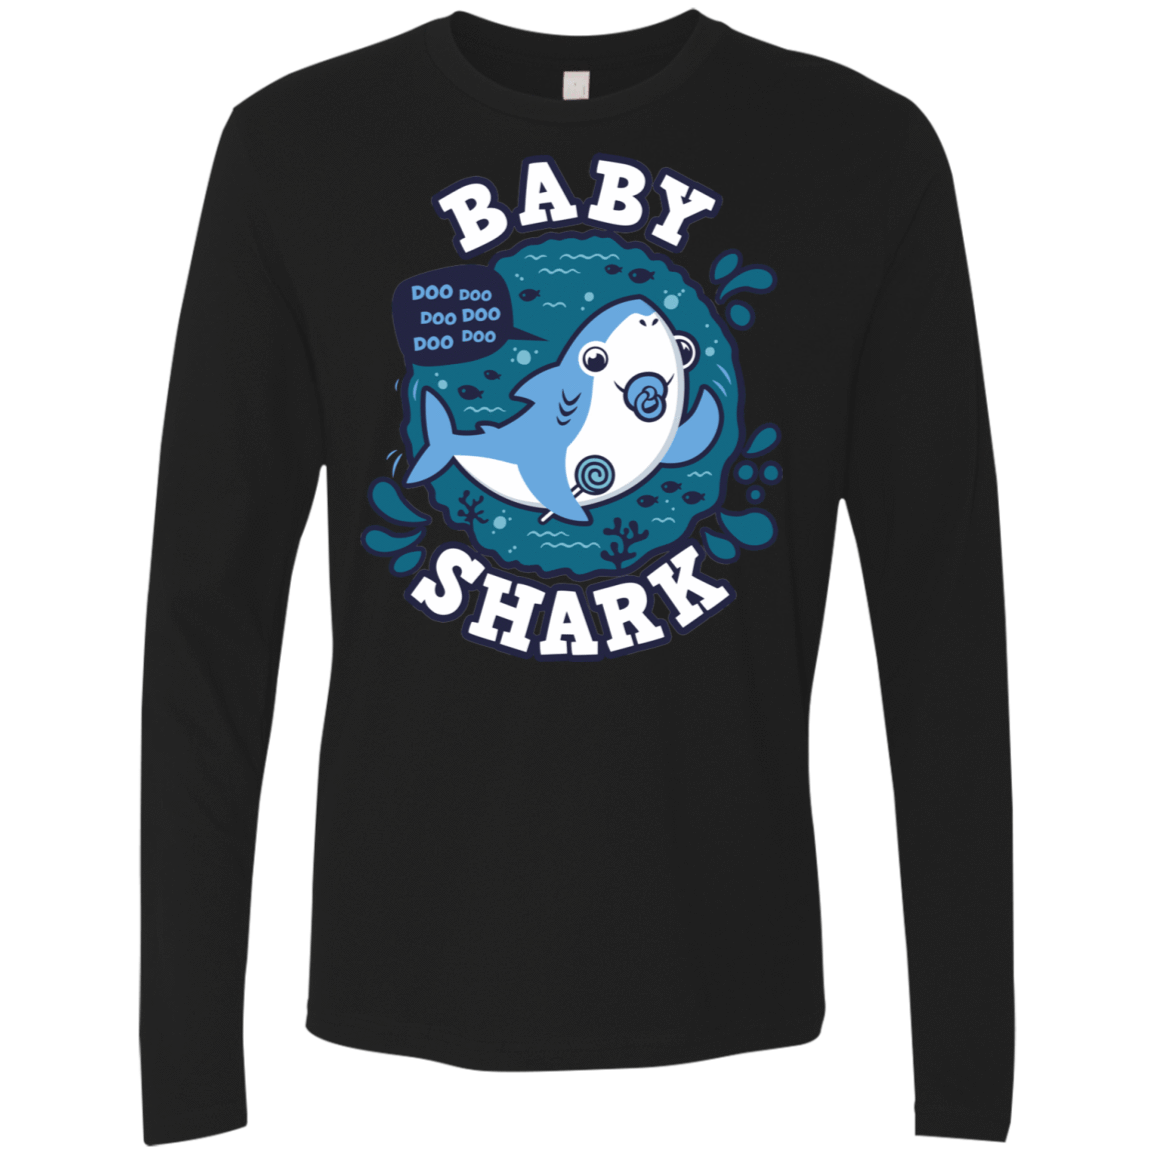 T-Shirts Black / S Shark Family trazo - Baby Boy chupete Men's Premium Long Sleeve